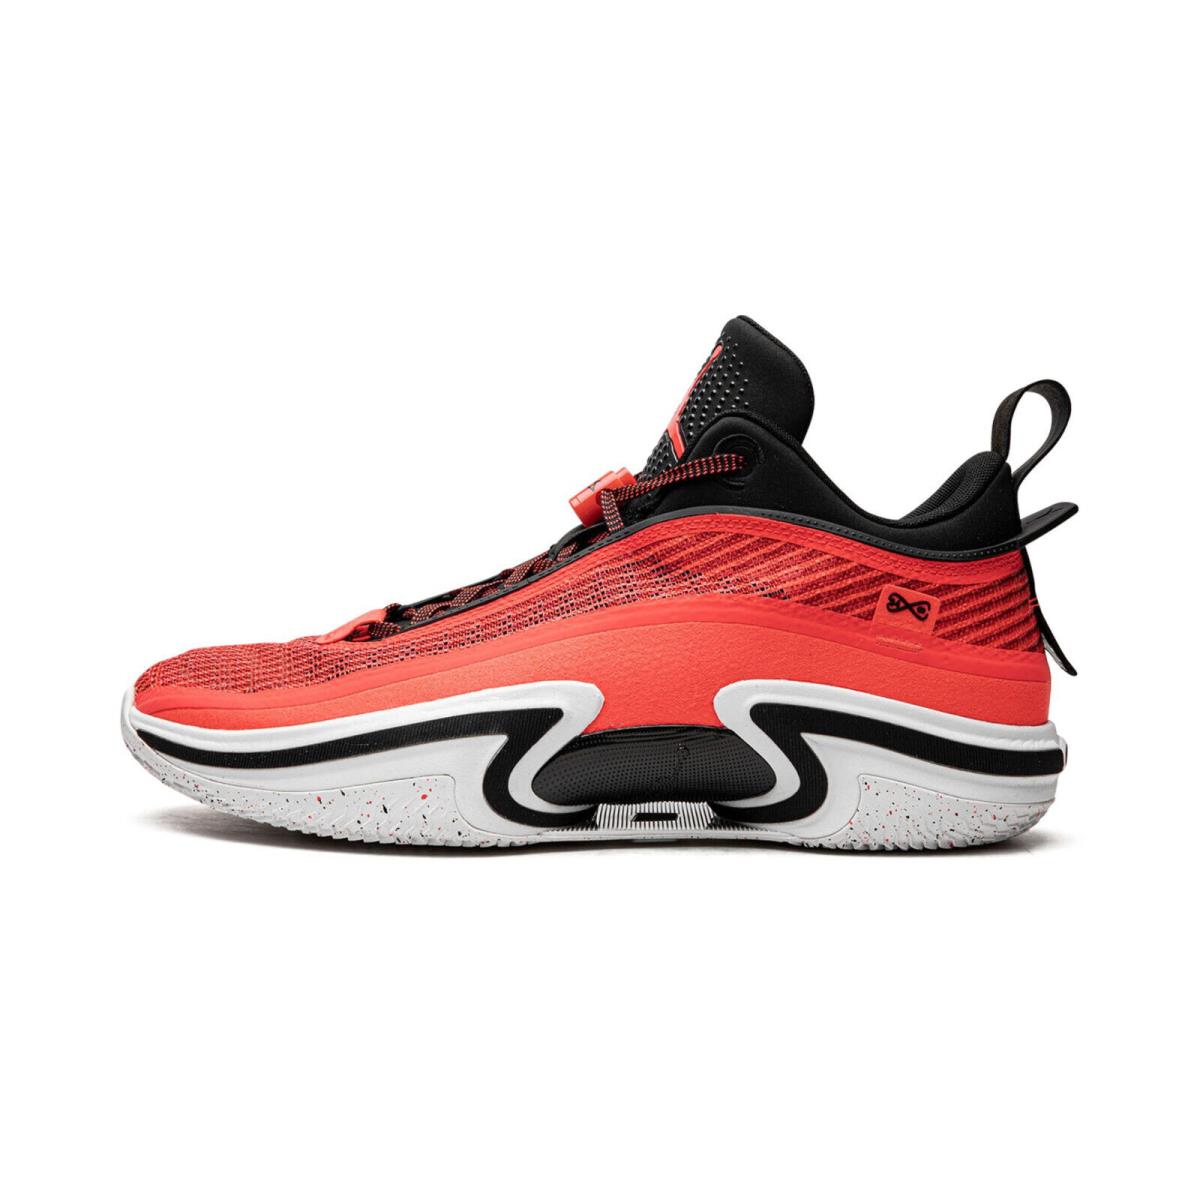 Men Nike Jordan 36 Xxxvi Basketball Shoes Size 8 Infrared Red Black DH0833 660